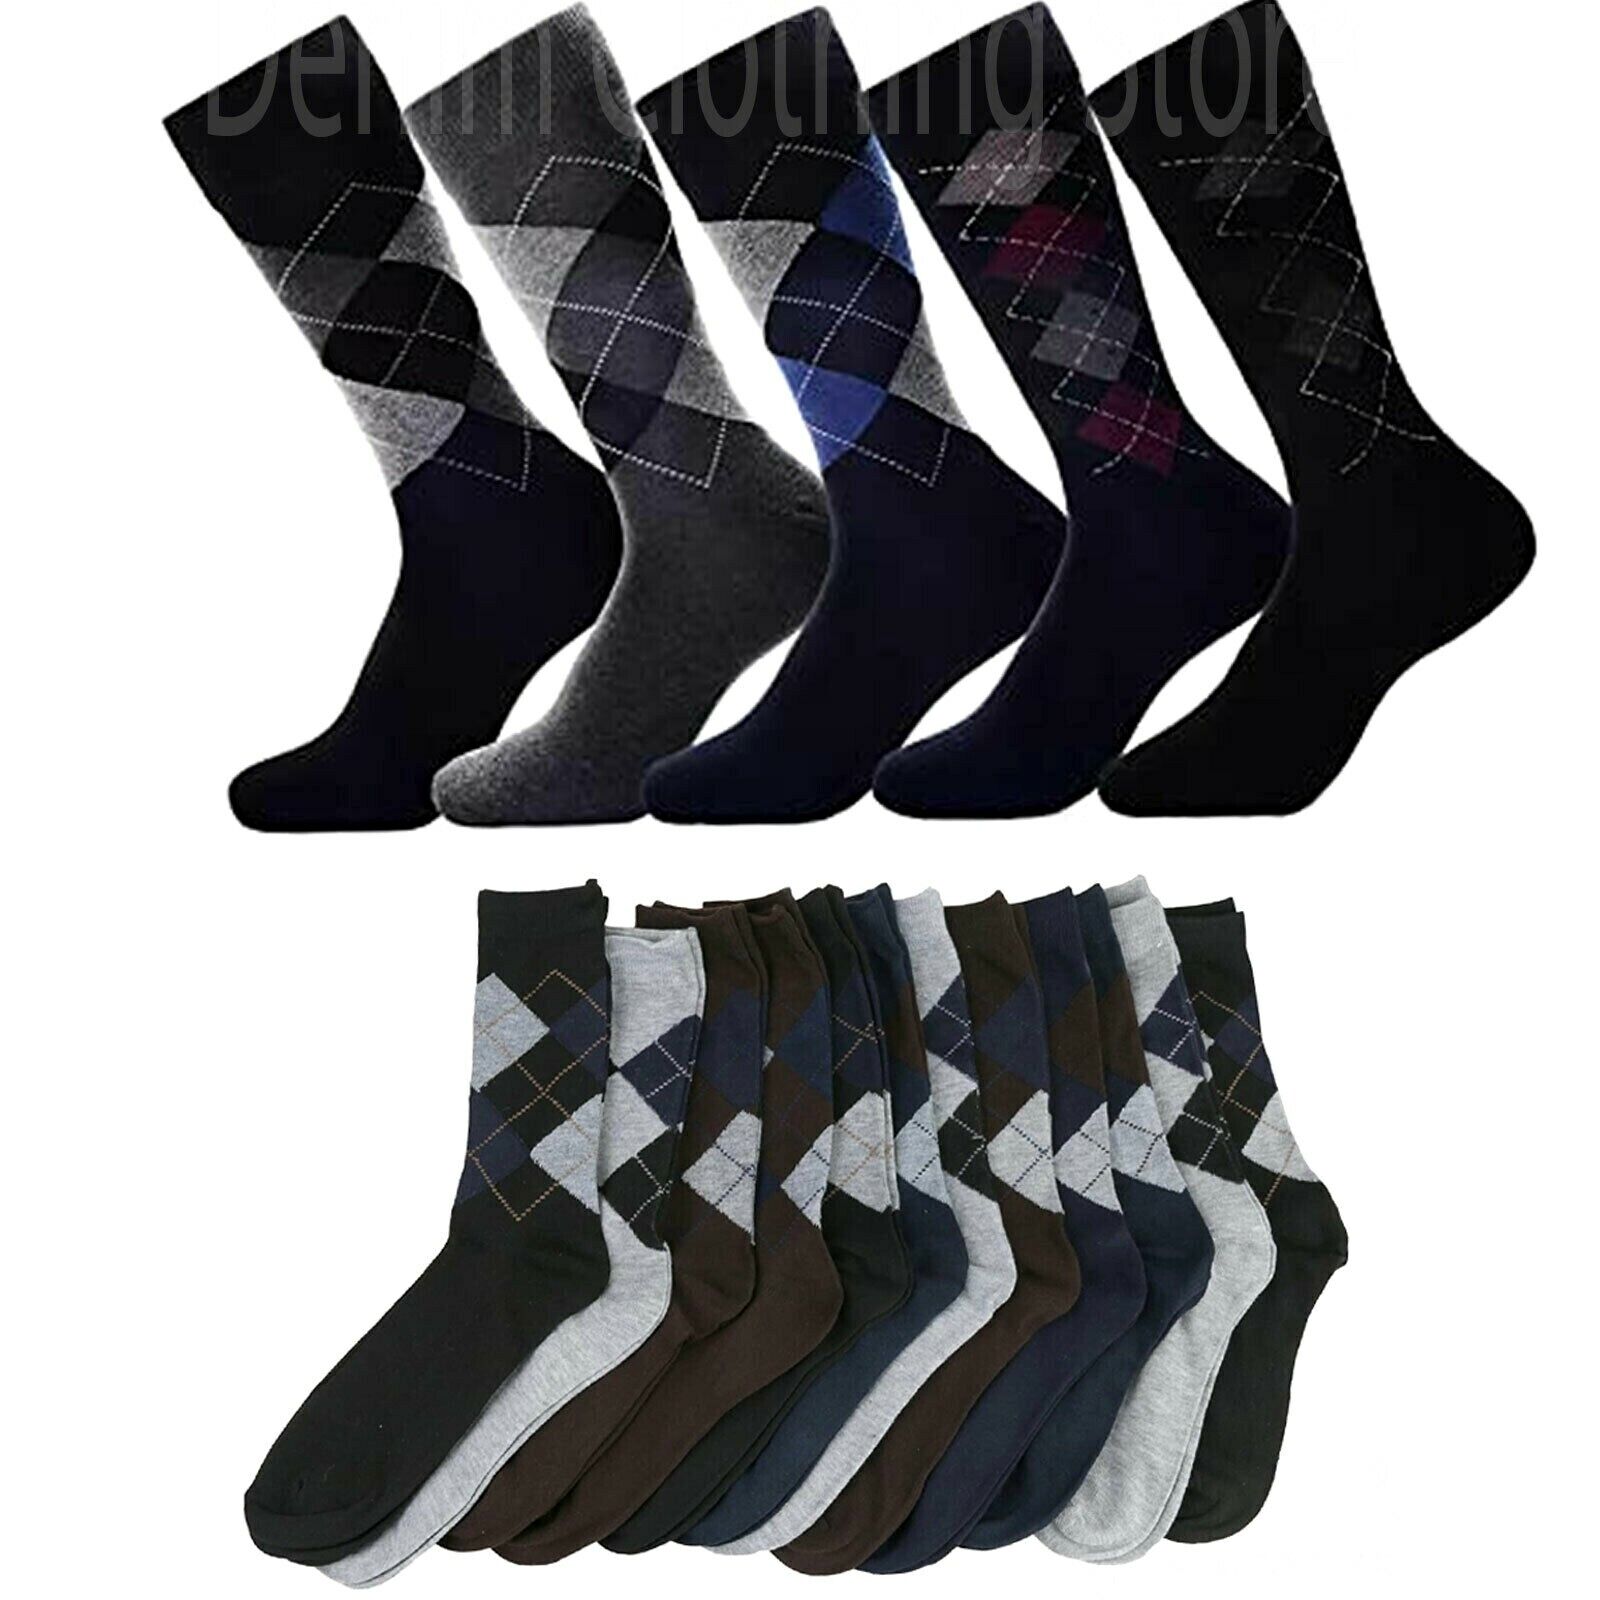  Men's Fashion Argyle Pattern Lot 6 12 pairs Cotton Blend Dress Socks 9-11 10-13